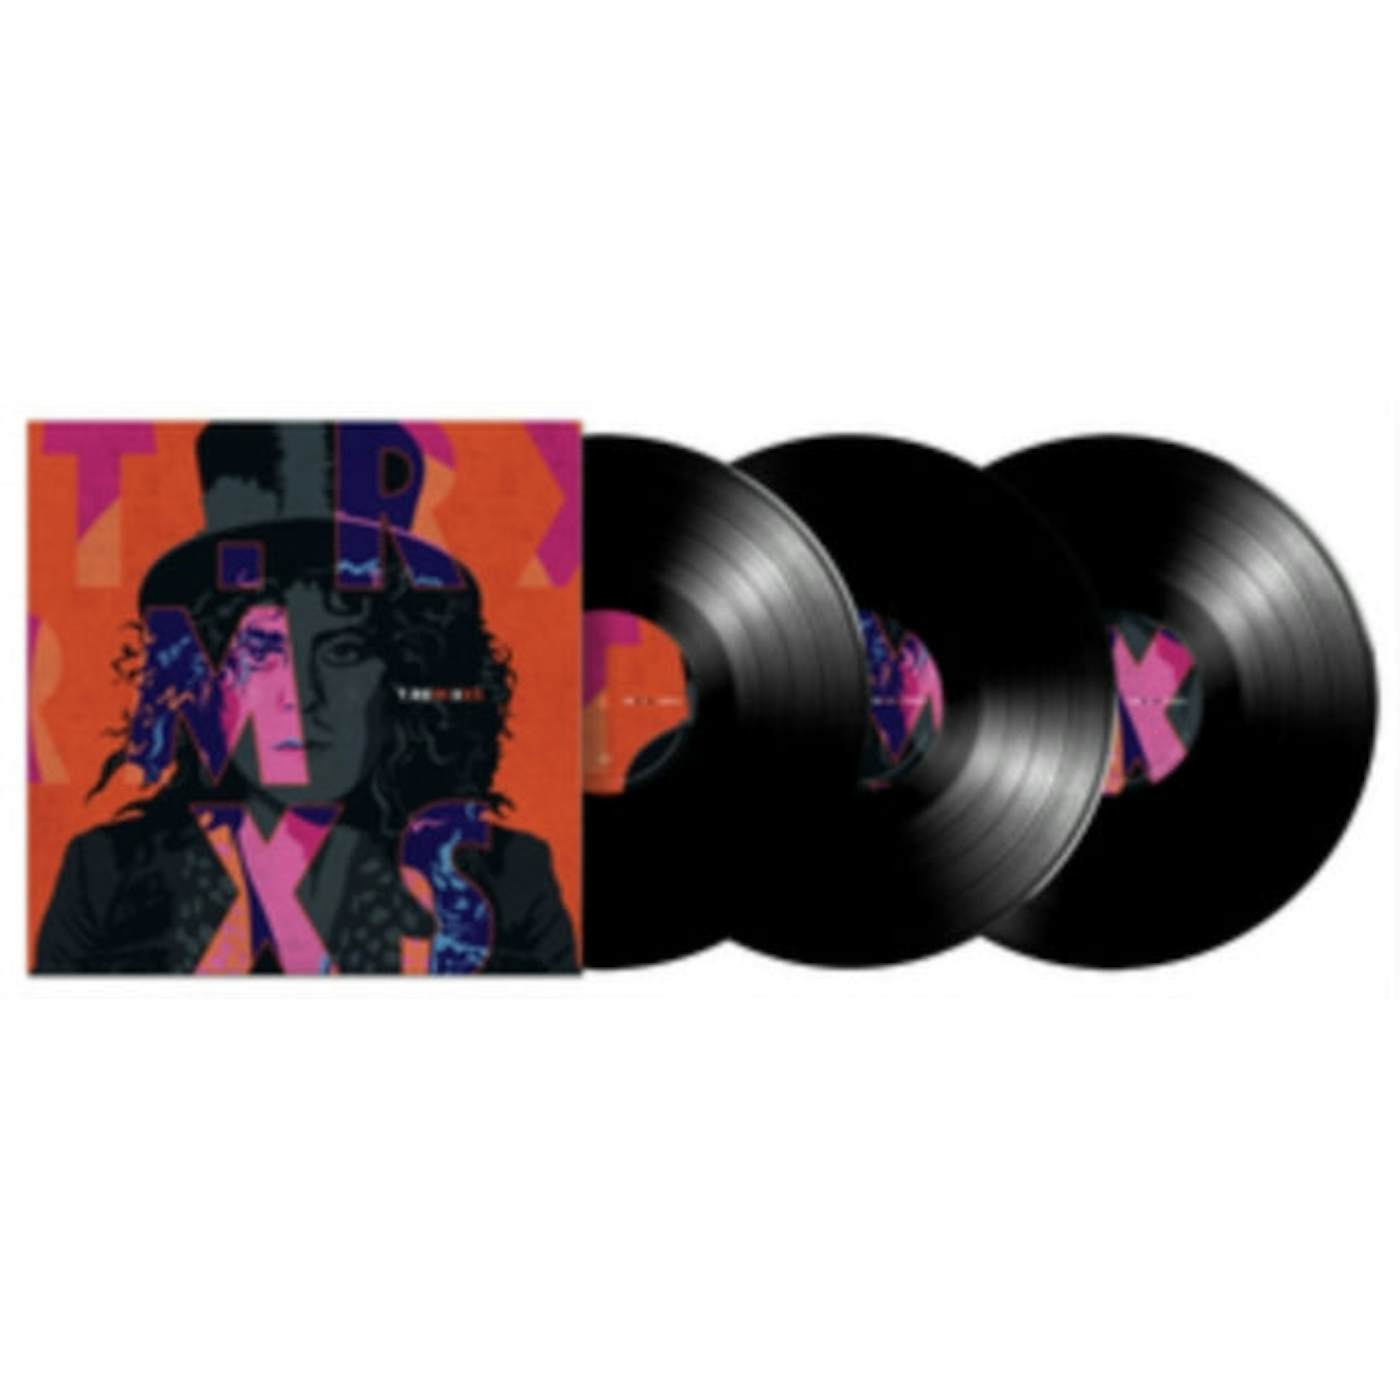 T. Rex LP - Deleted - Remixes (Vinyl)